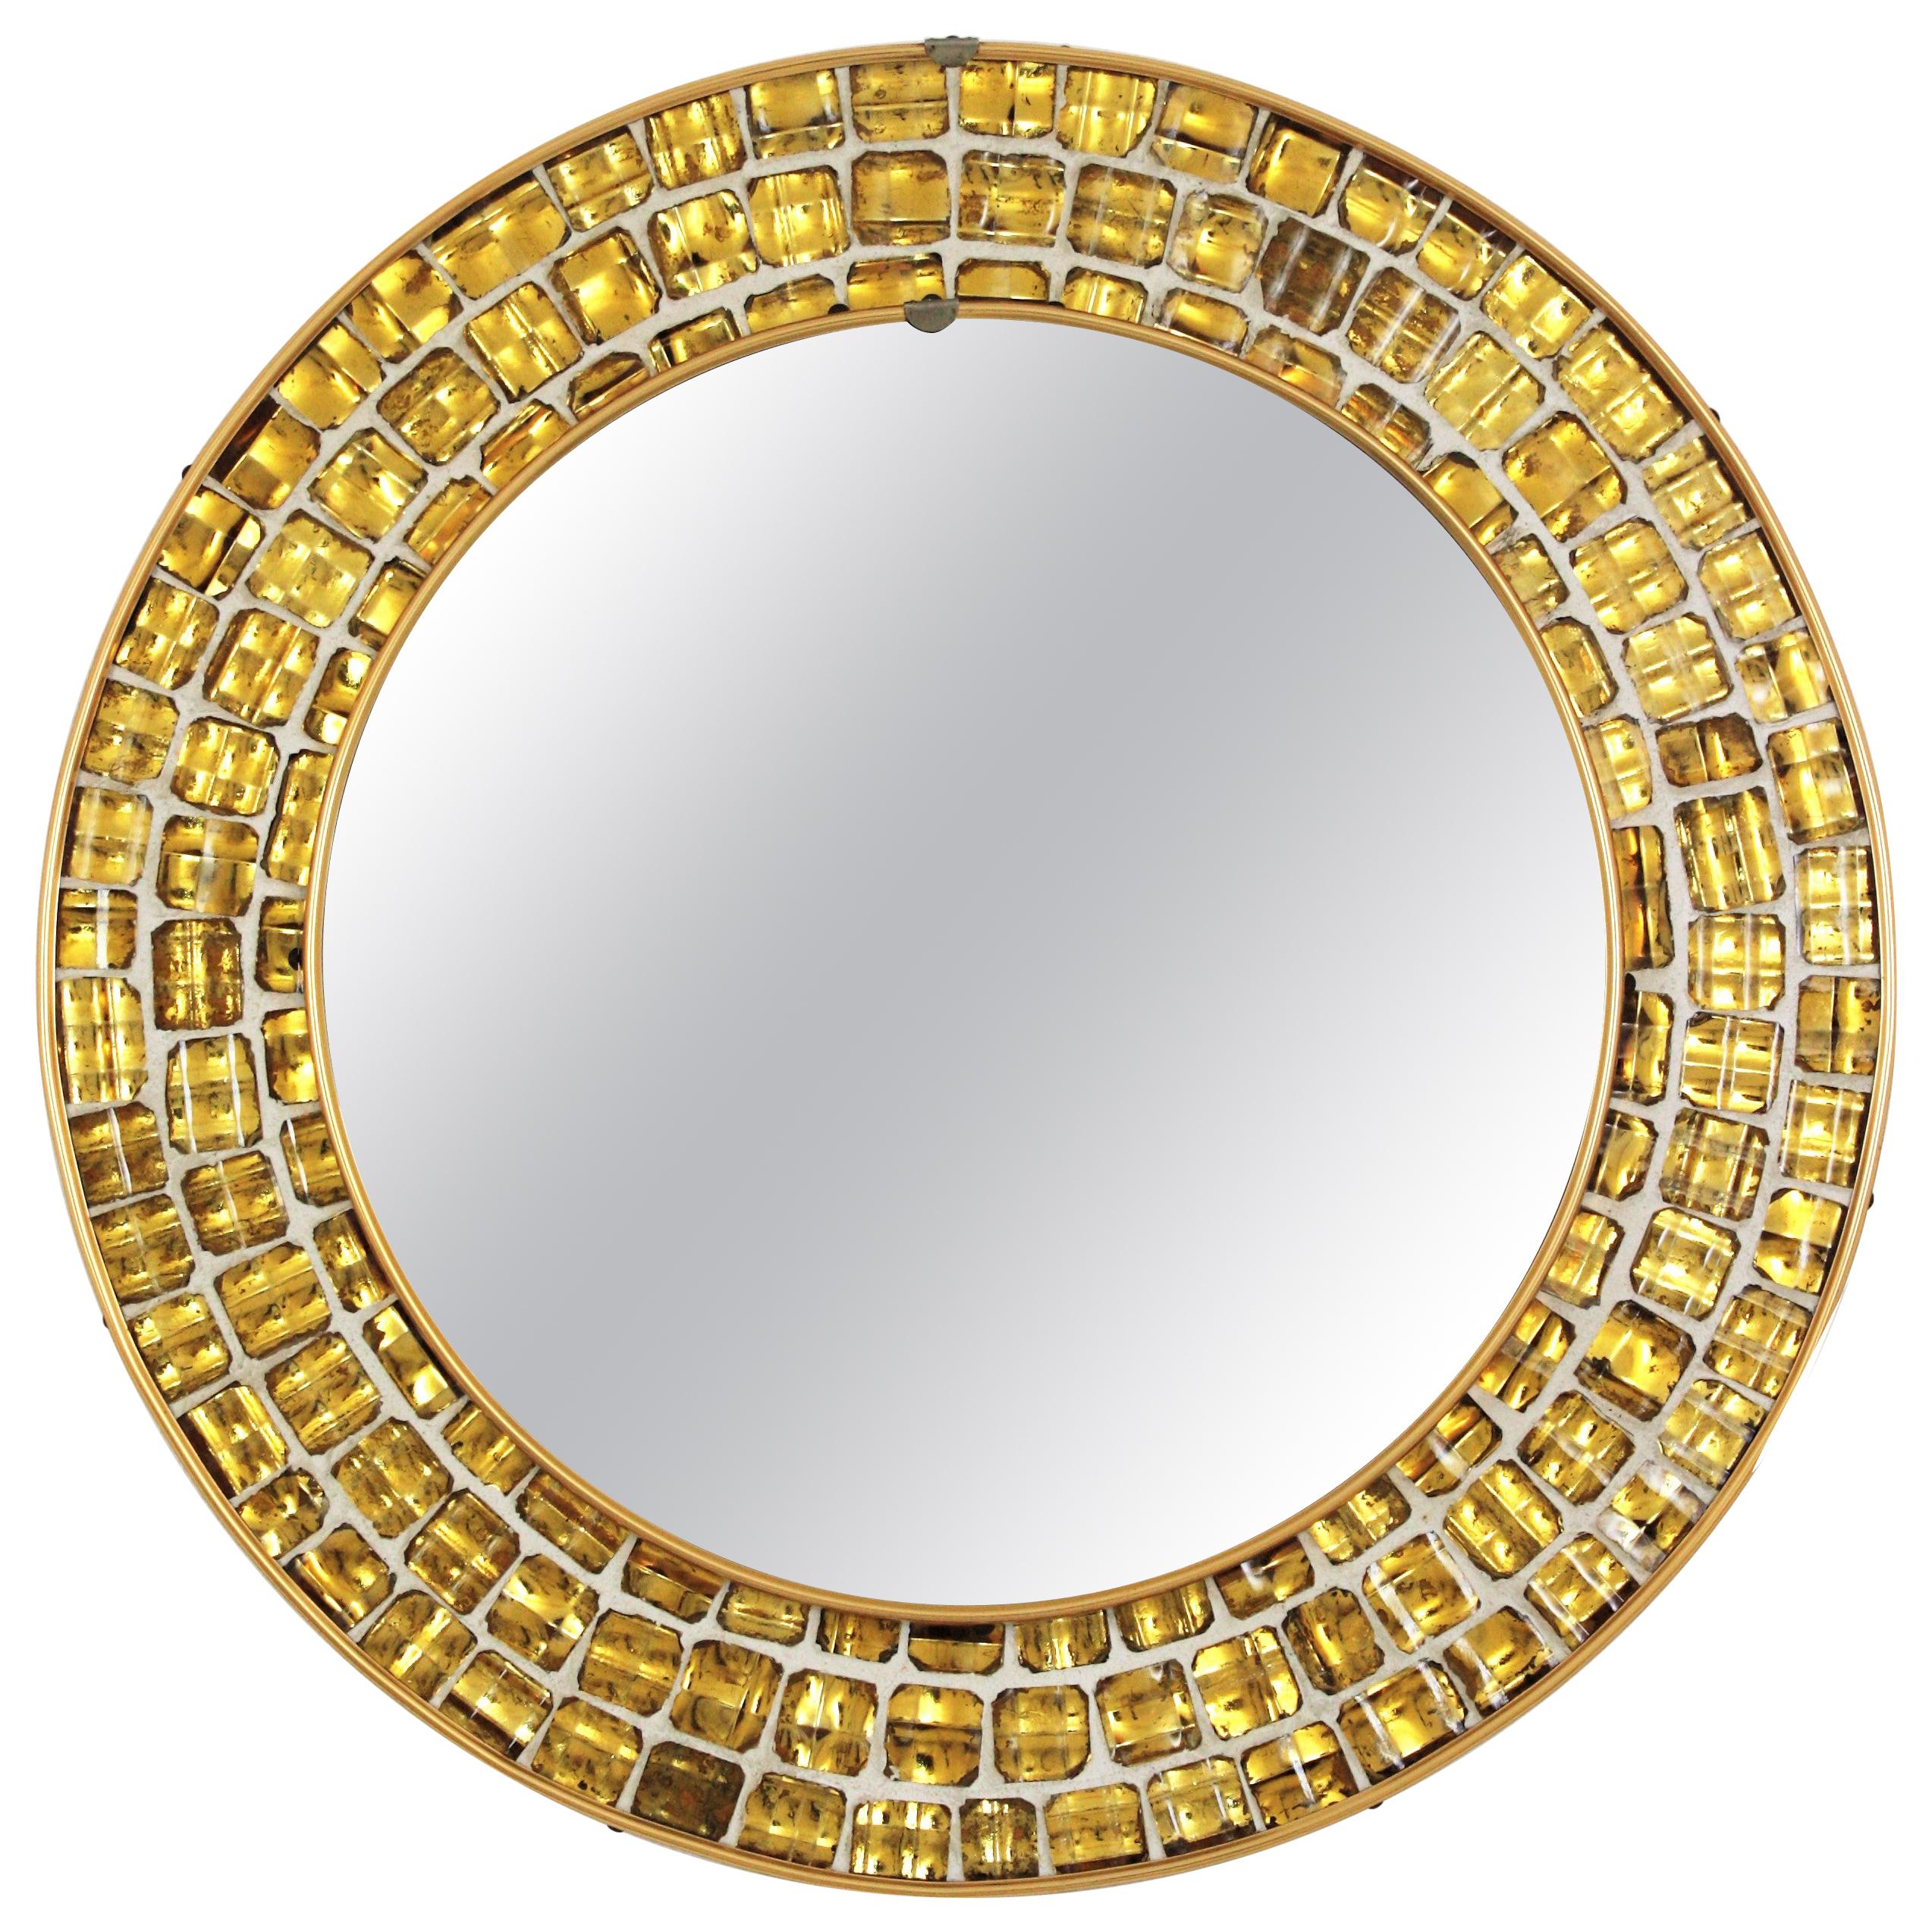 Midcentury Round Mirror with Golden Glass Mosaic Frame